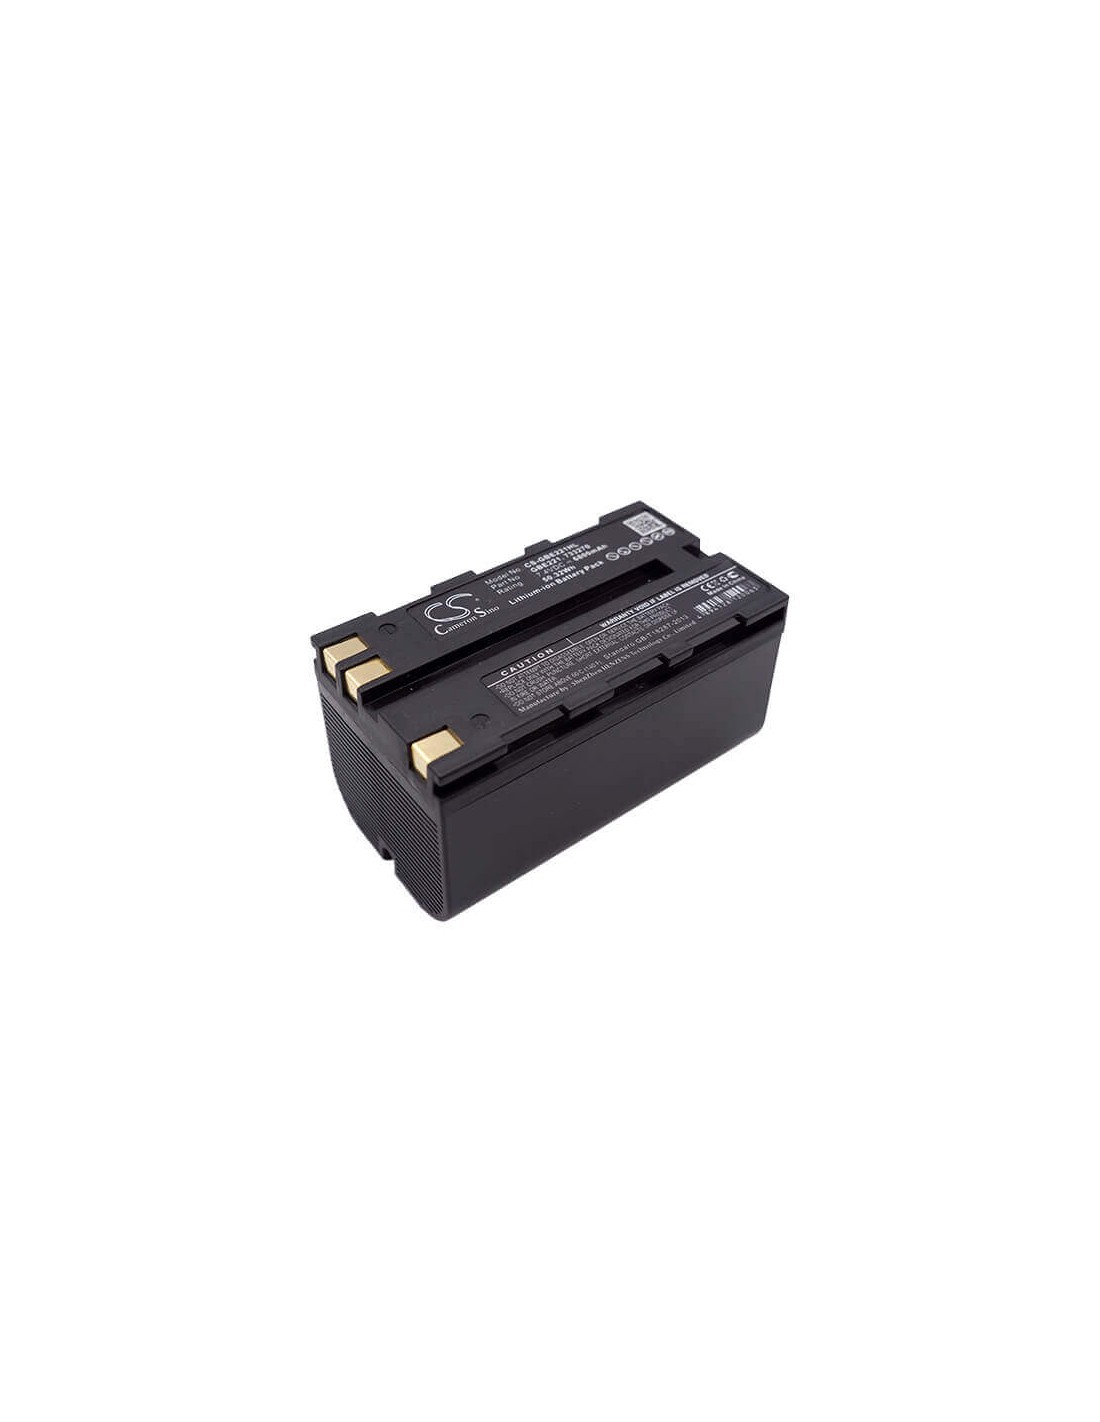 Battery for Geomax, Stonex R6, Zoom 20, Zoom 30, Zoom 35 7.4V, 6800mAh - 50.32Wh